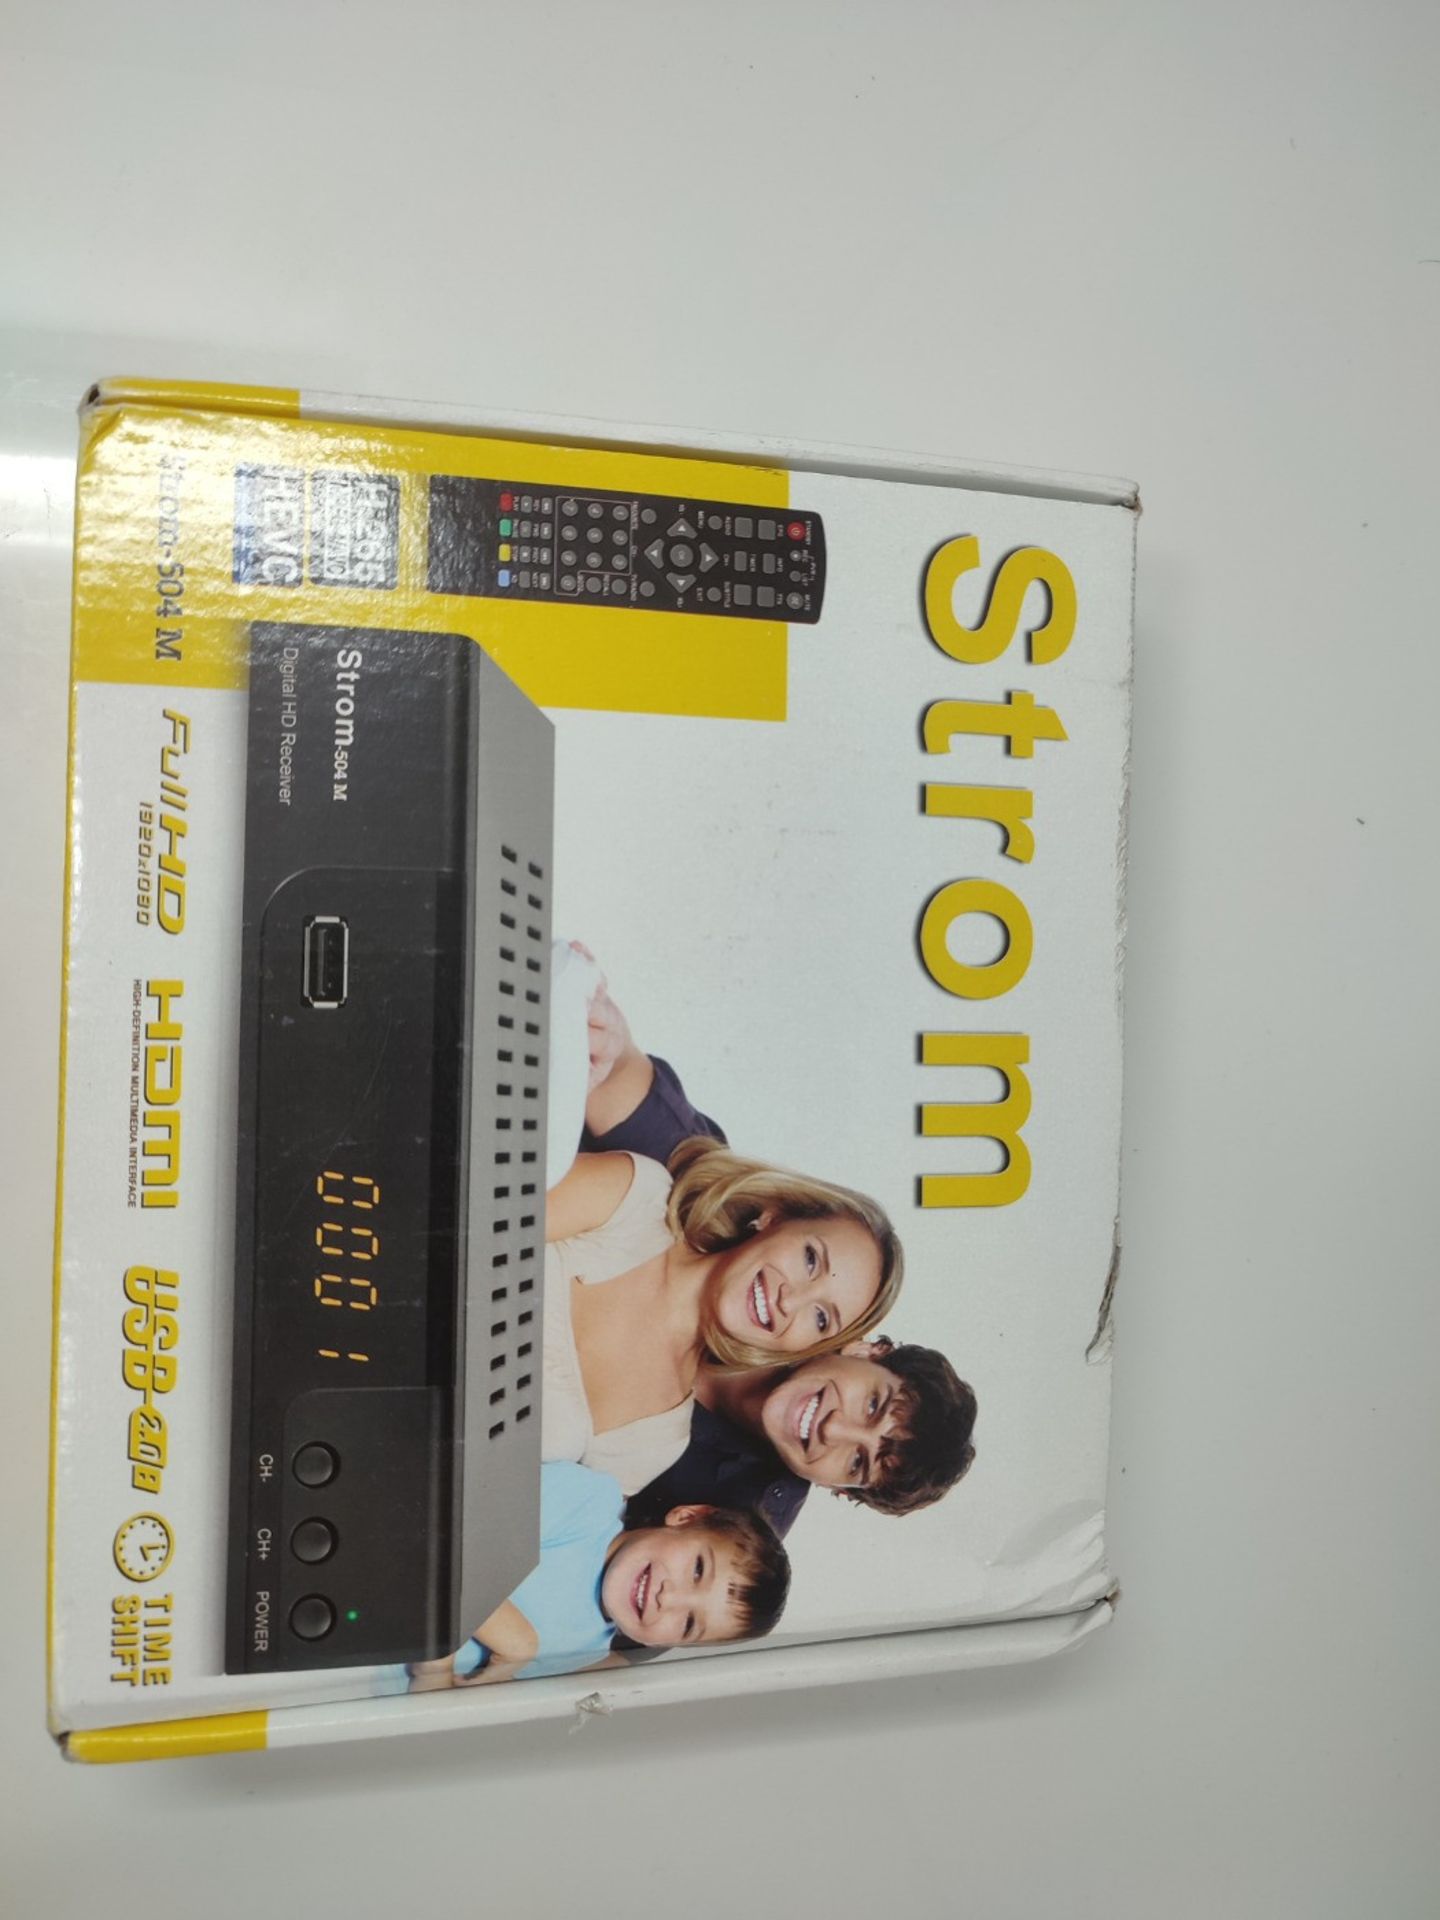 STROM 504 - Decoder TNT Full HD DVB-T2, compatibile con HEVC264 (HDMI, Scart, USB, Dig - Bild 2 aus 3